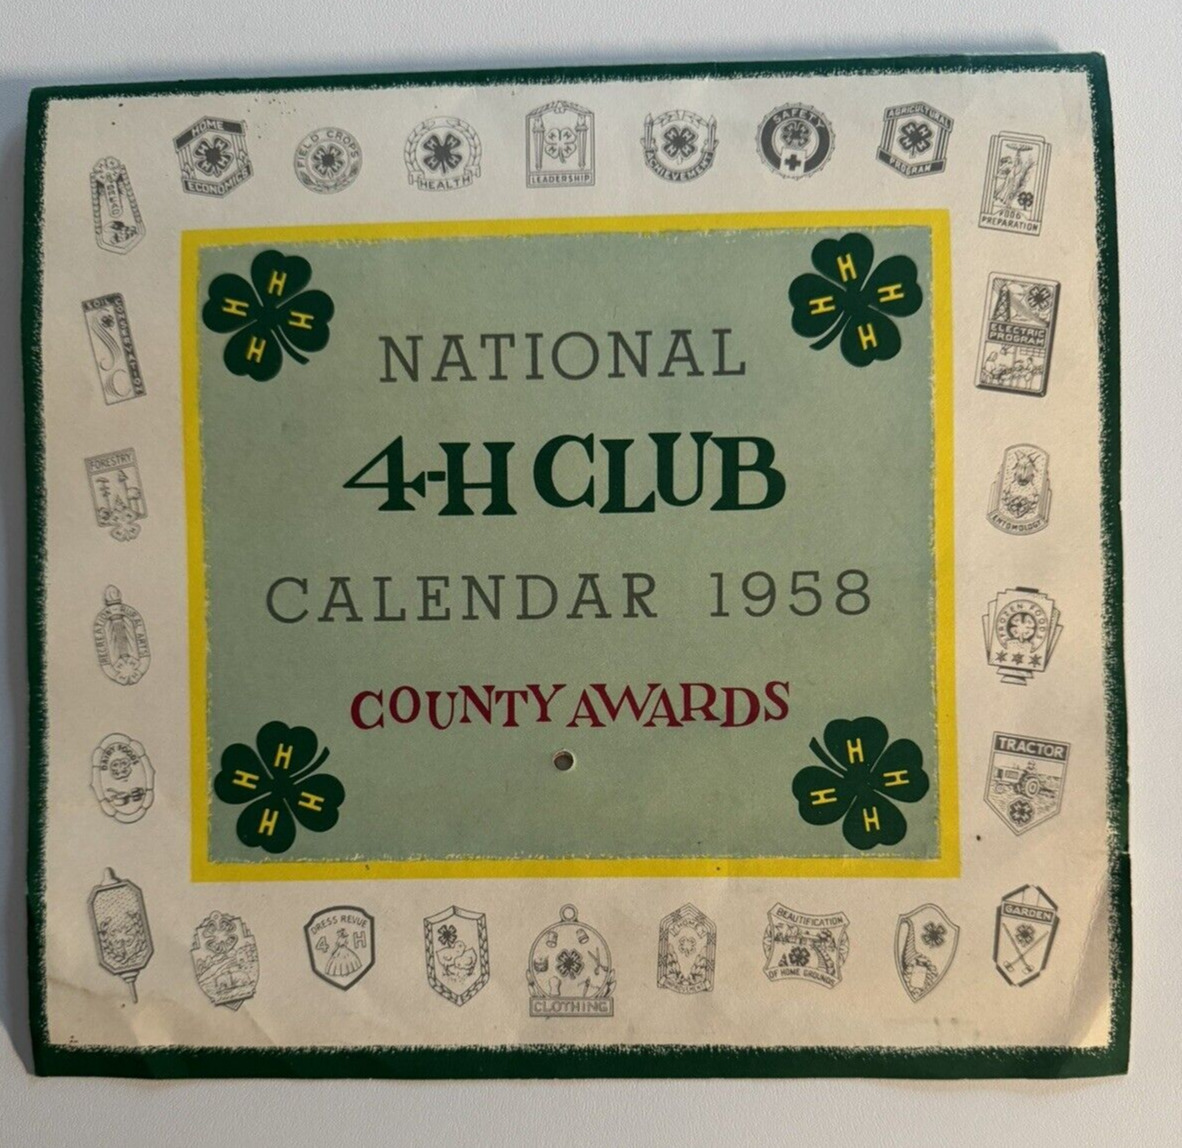 National 4-H Club Calendar 1958 County Awards Proctor Poultney Vt Vermont